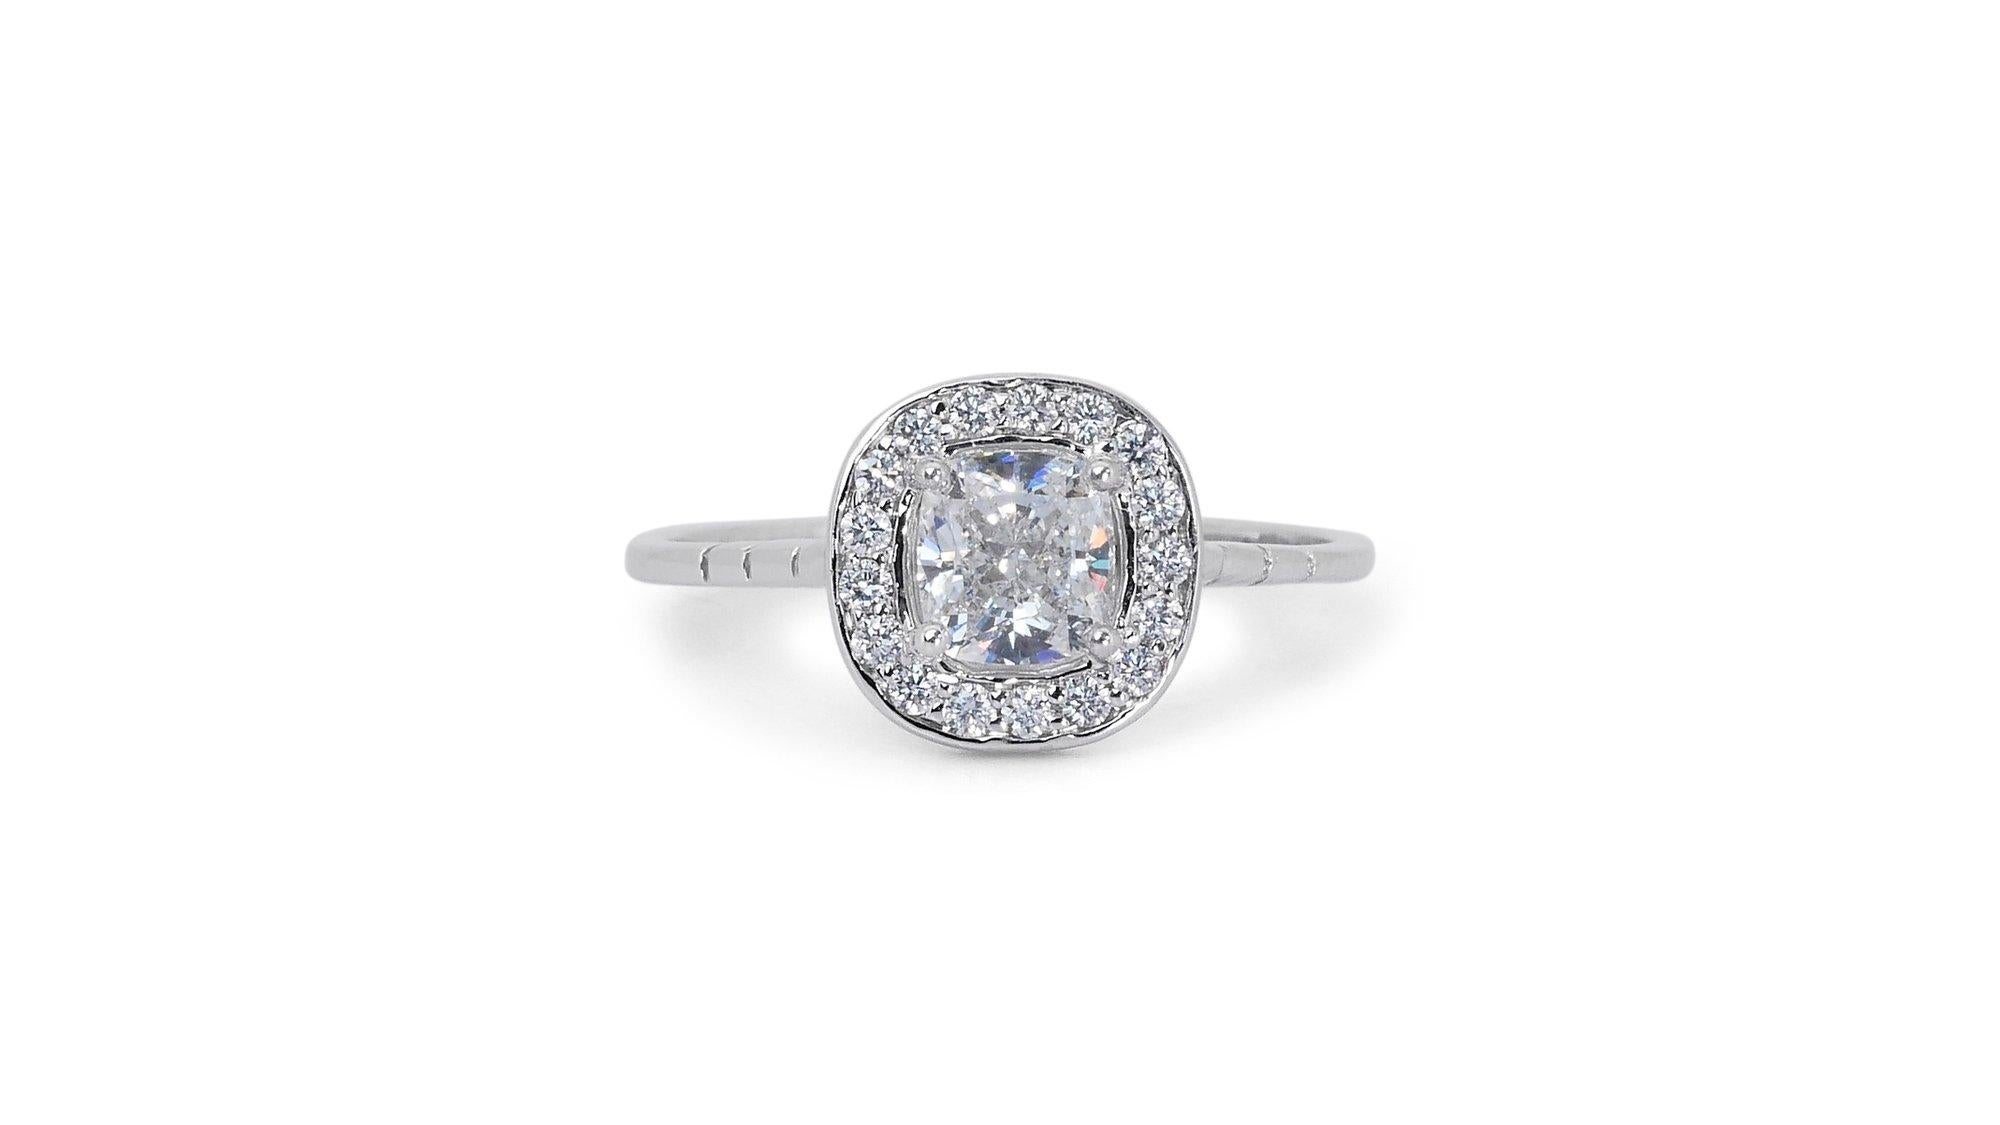 Elegant 1.17ct Diamonds Halo Ring in 18k White Gold - GIA Certified For Sale 3